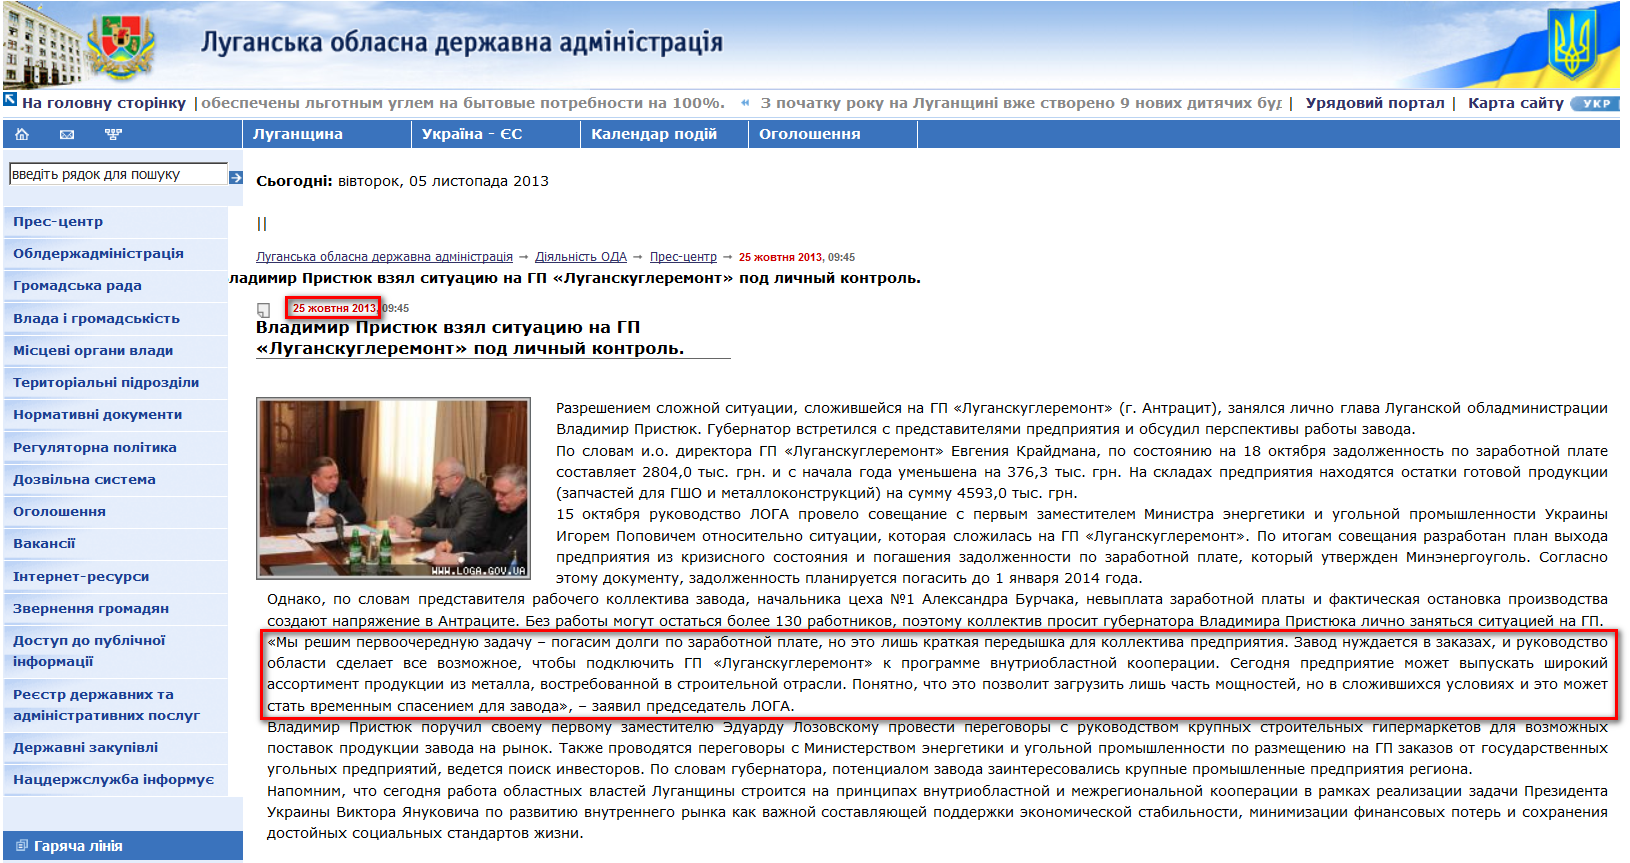 http://www.loga.gov.ua/oda/press/news/2013/10/25/news_58793.html